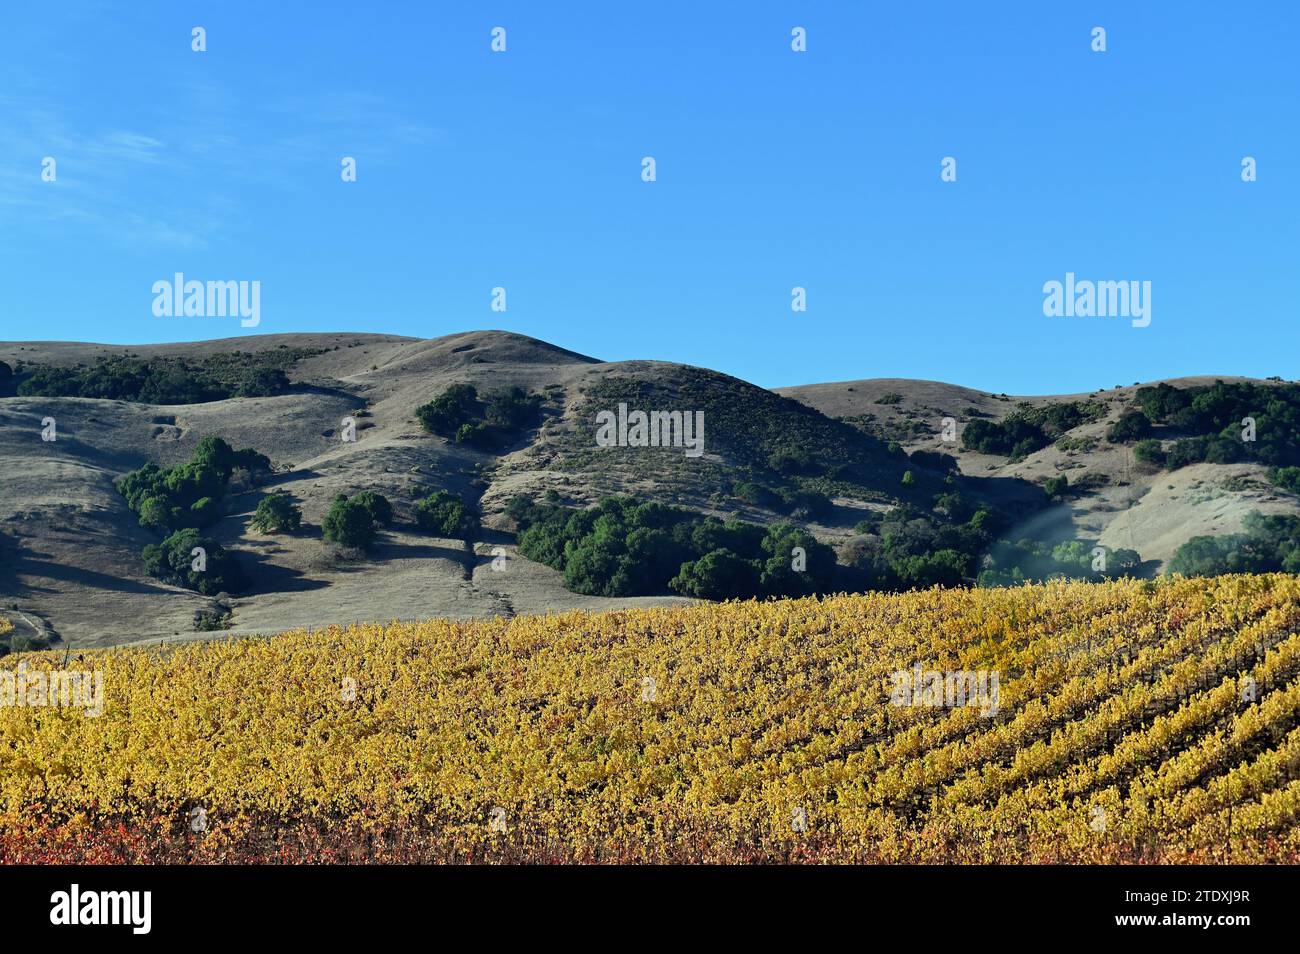 Sonoma, California, USA, Sun illuminates the hills and the autumn-tinted vines in vineyard fields in Sonoma County, Stock Photo